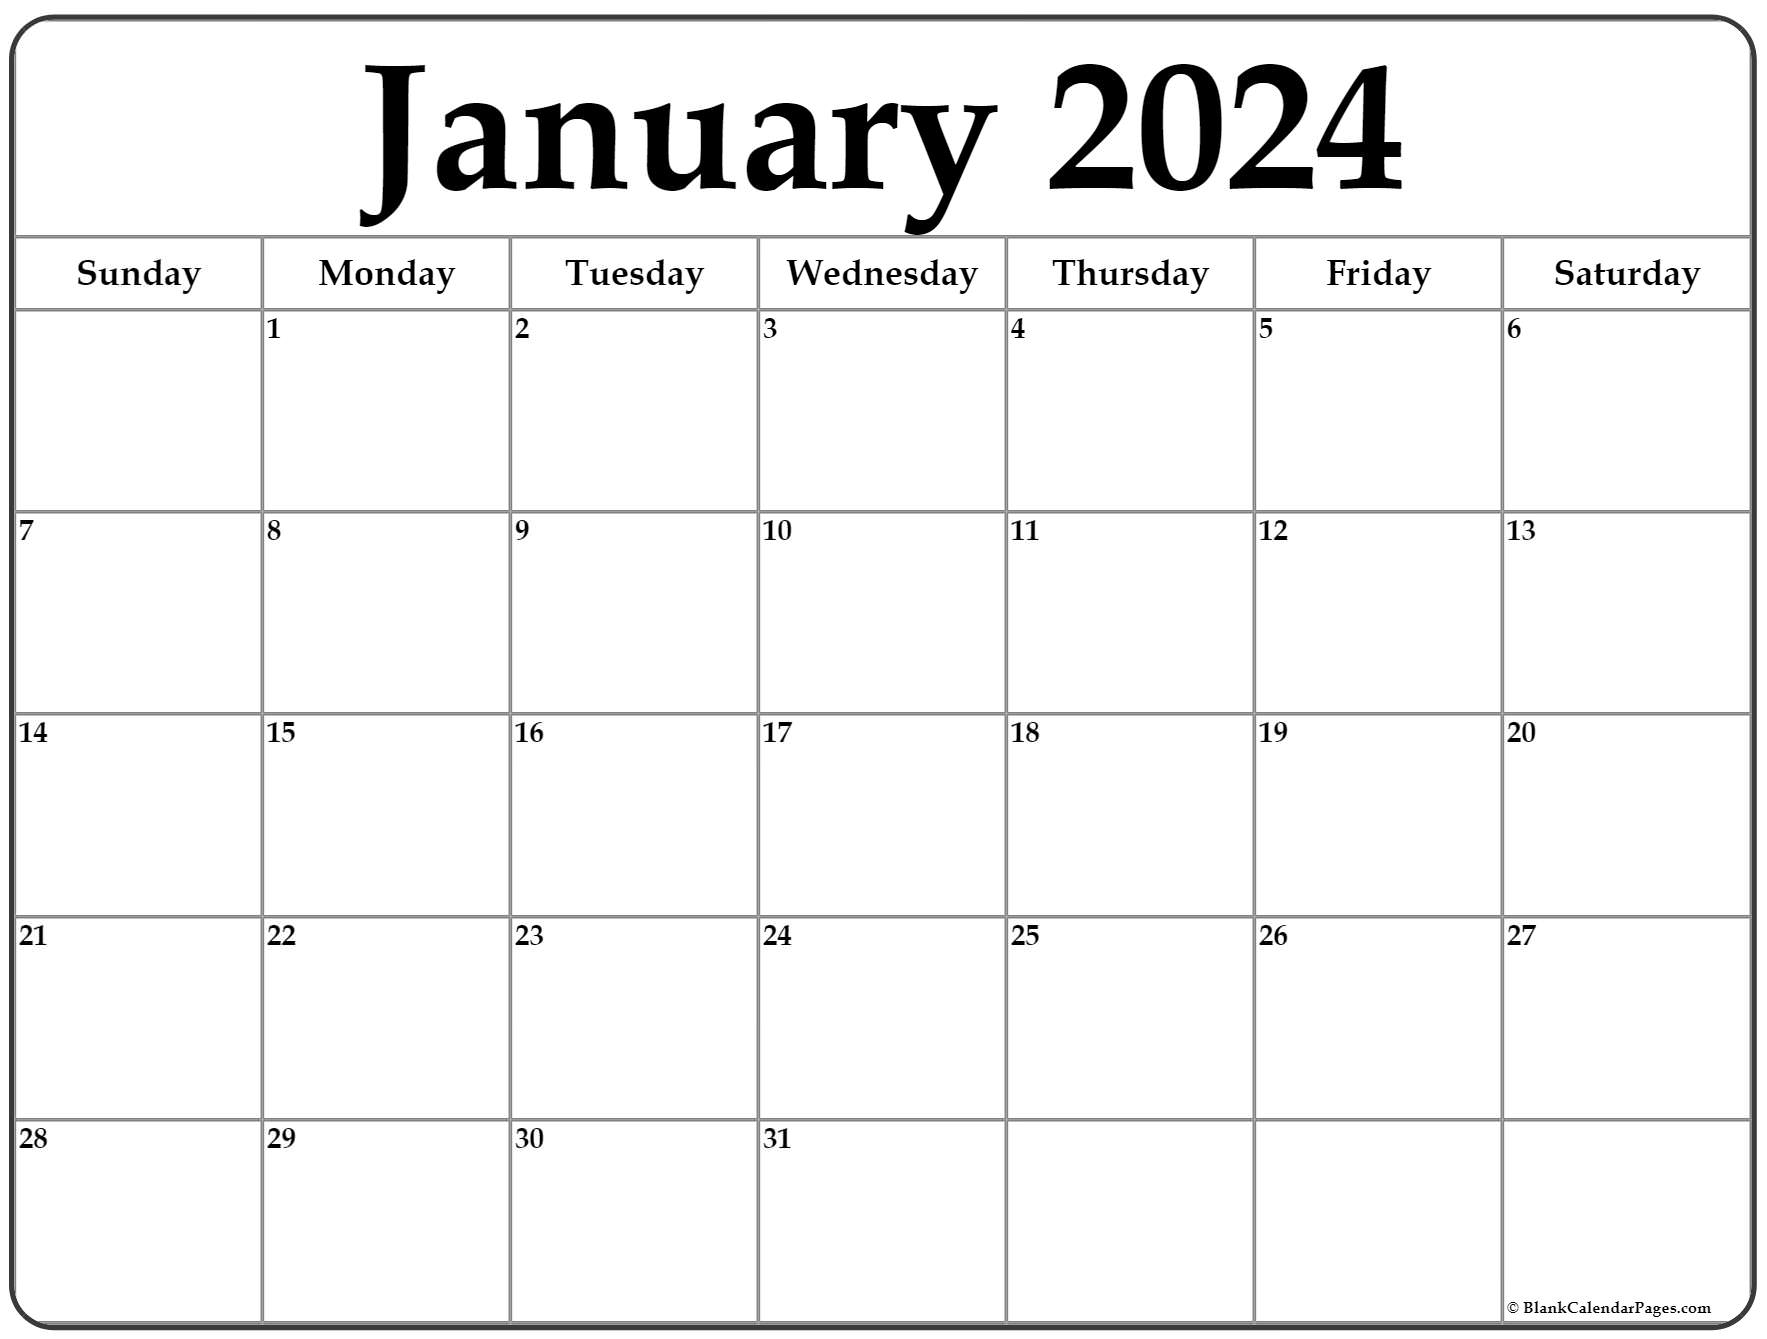 January 2024 Calendar | Free Printable Calendar for 2024 Calendar Blank Printable